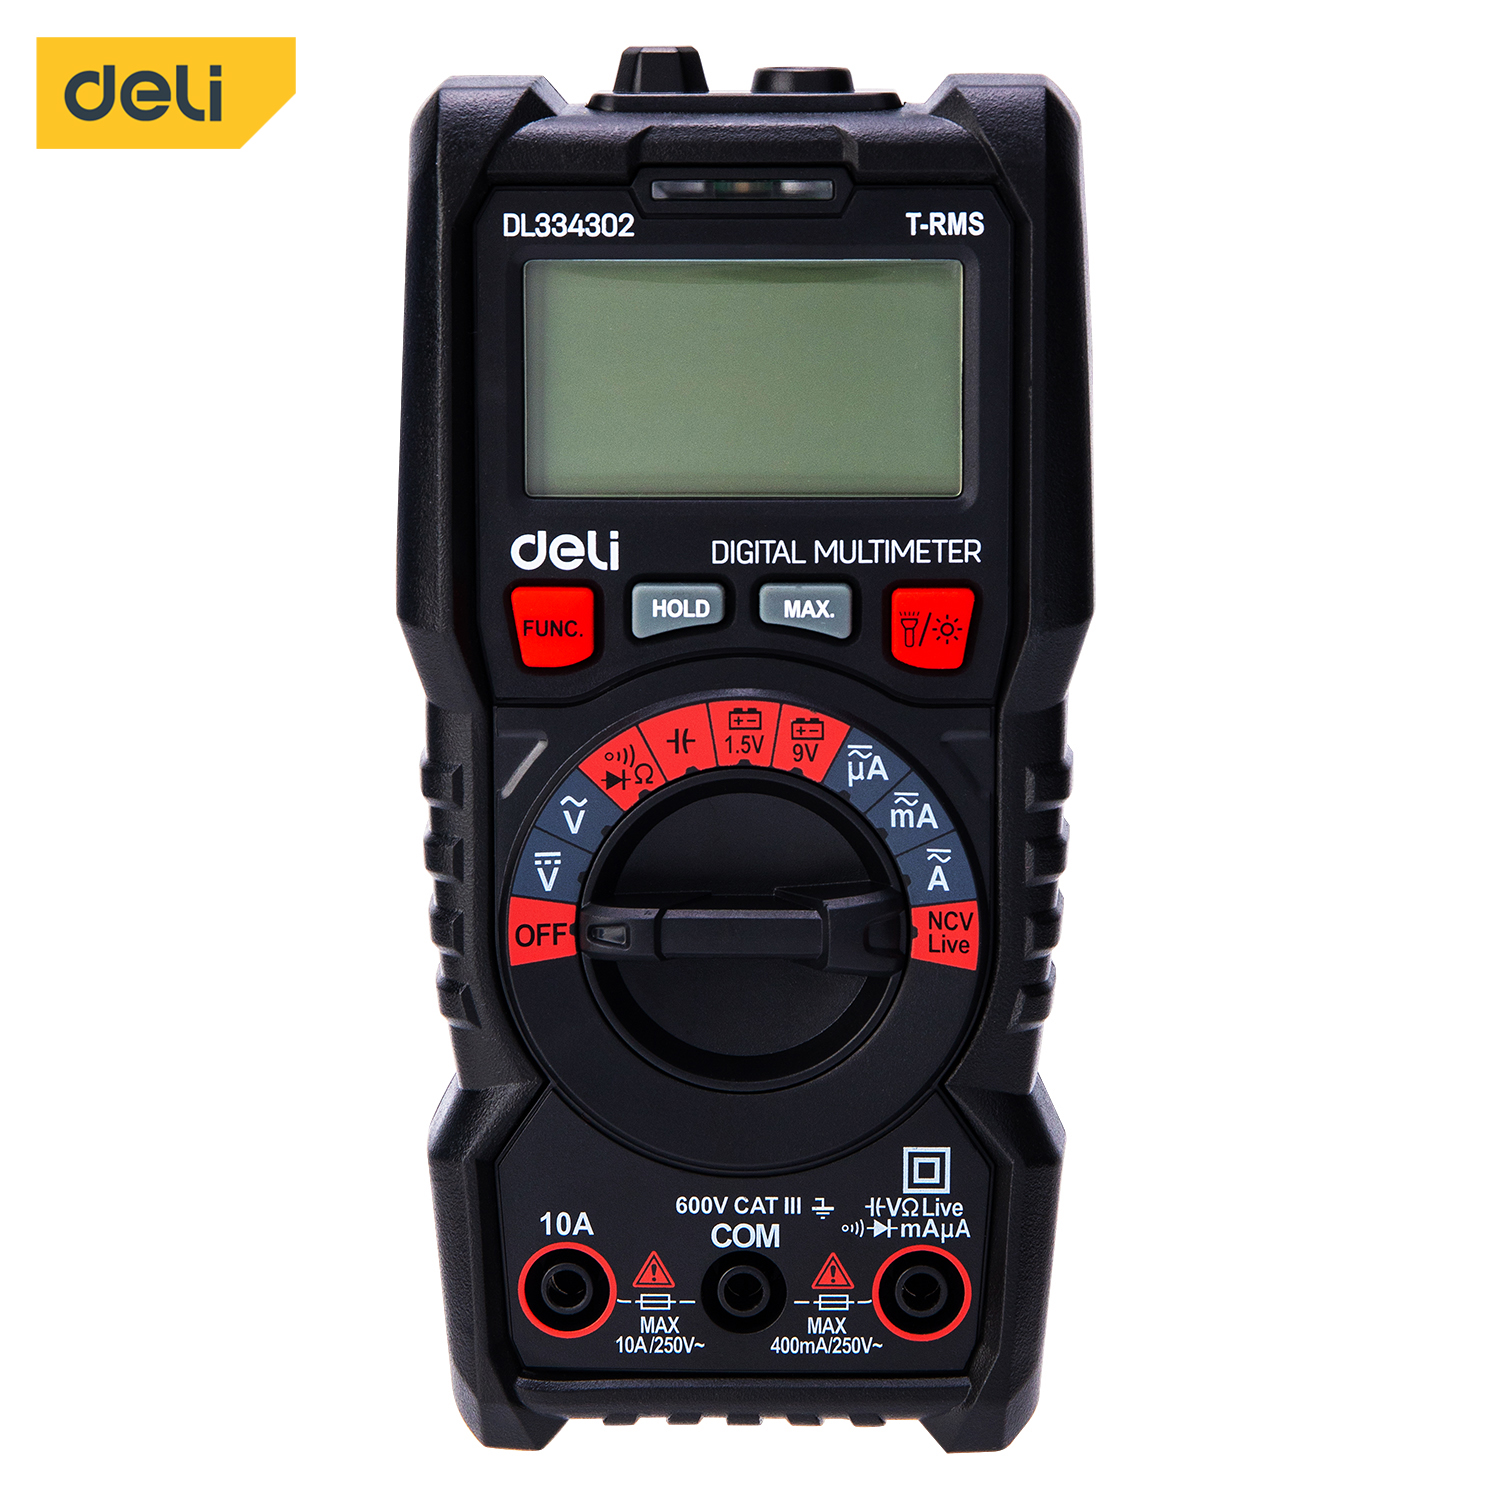 Deli-EDL334302 Digital Multimeter